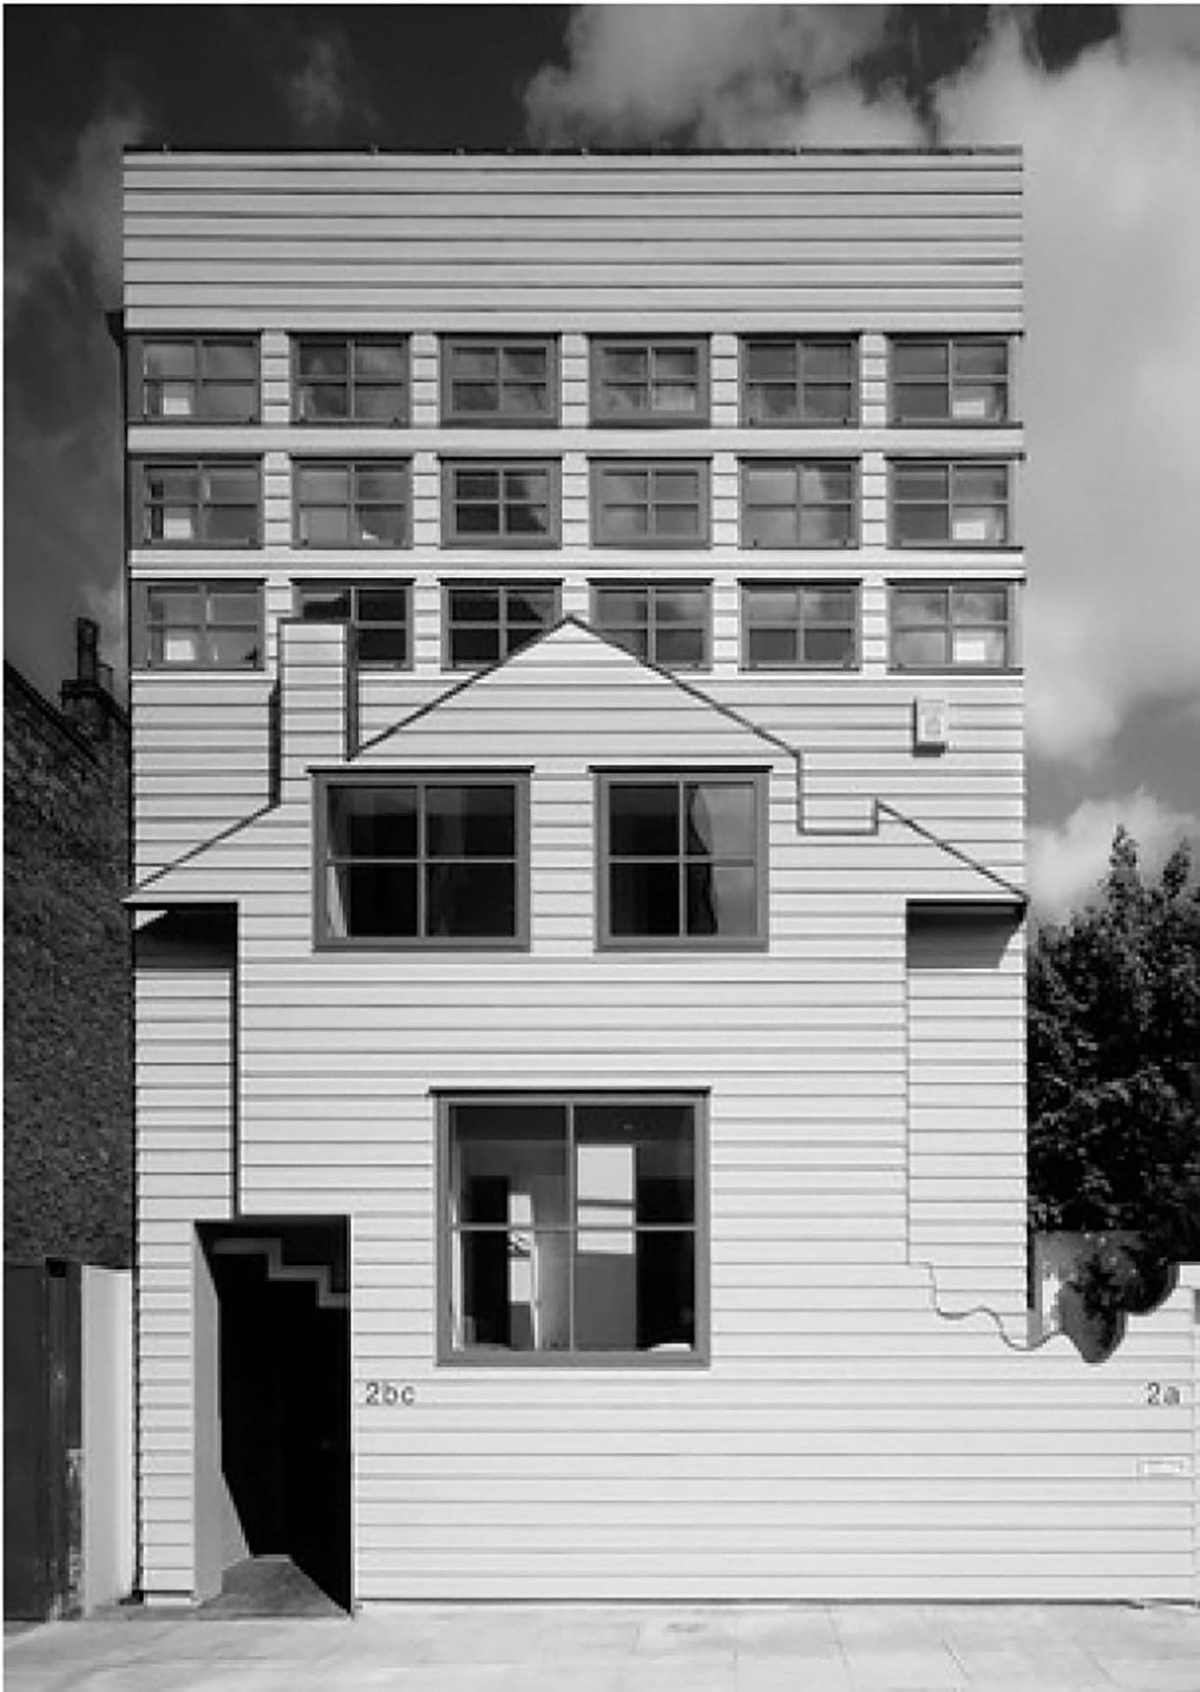 Renovation Report: Historic building reimagined for Fidelity Bank HQ — SVN